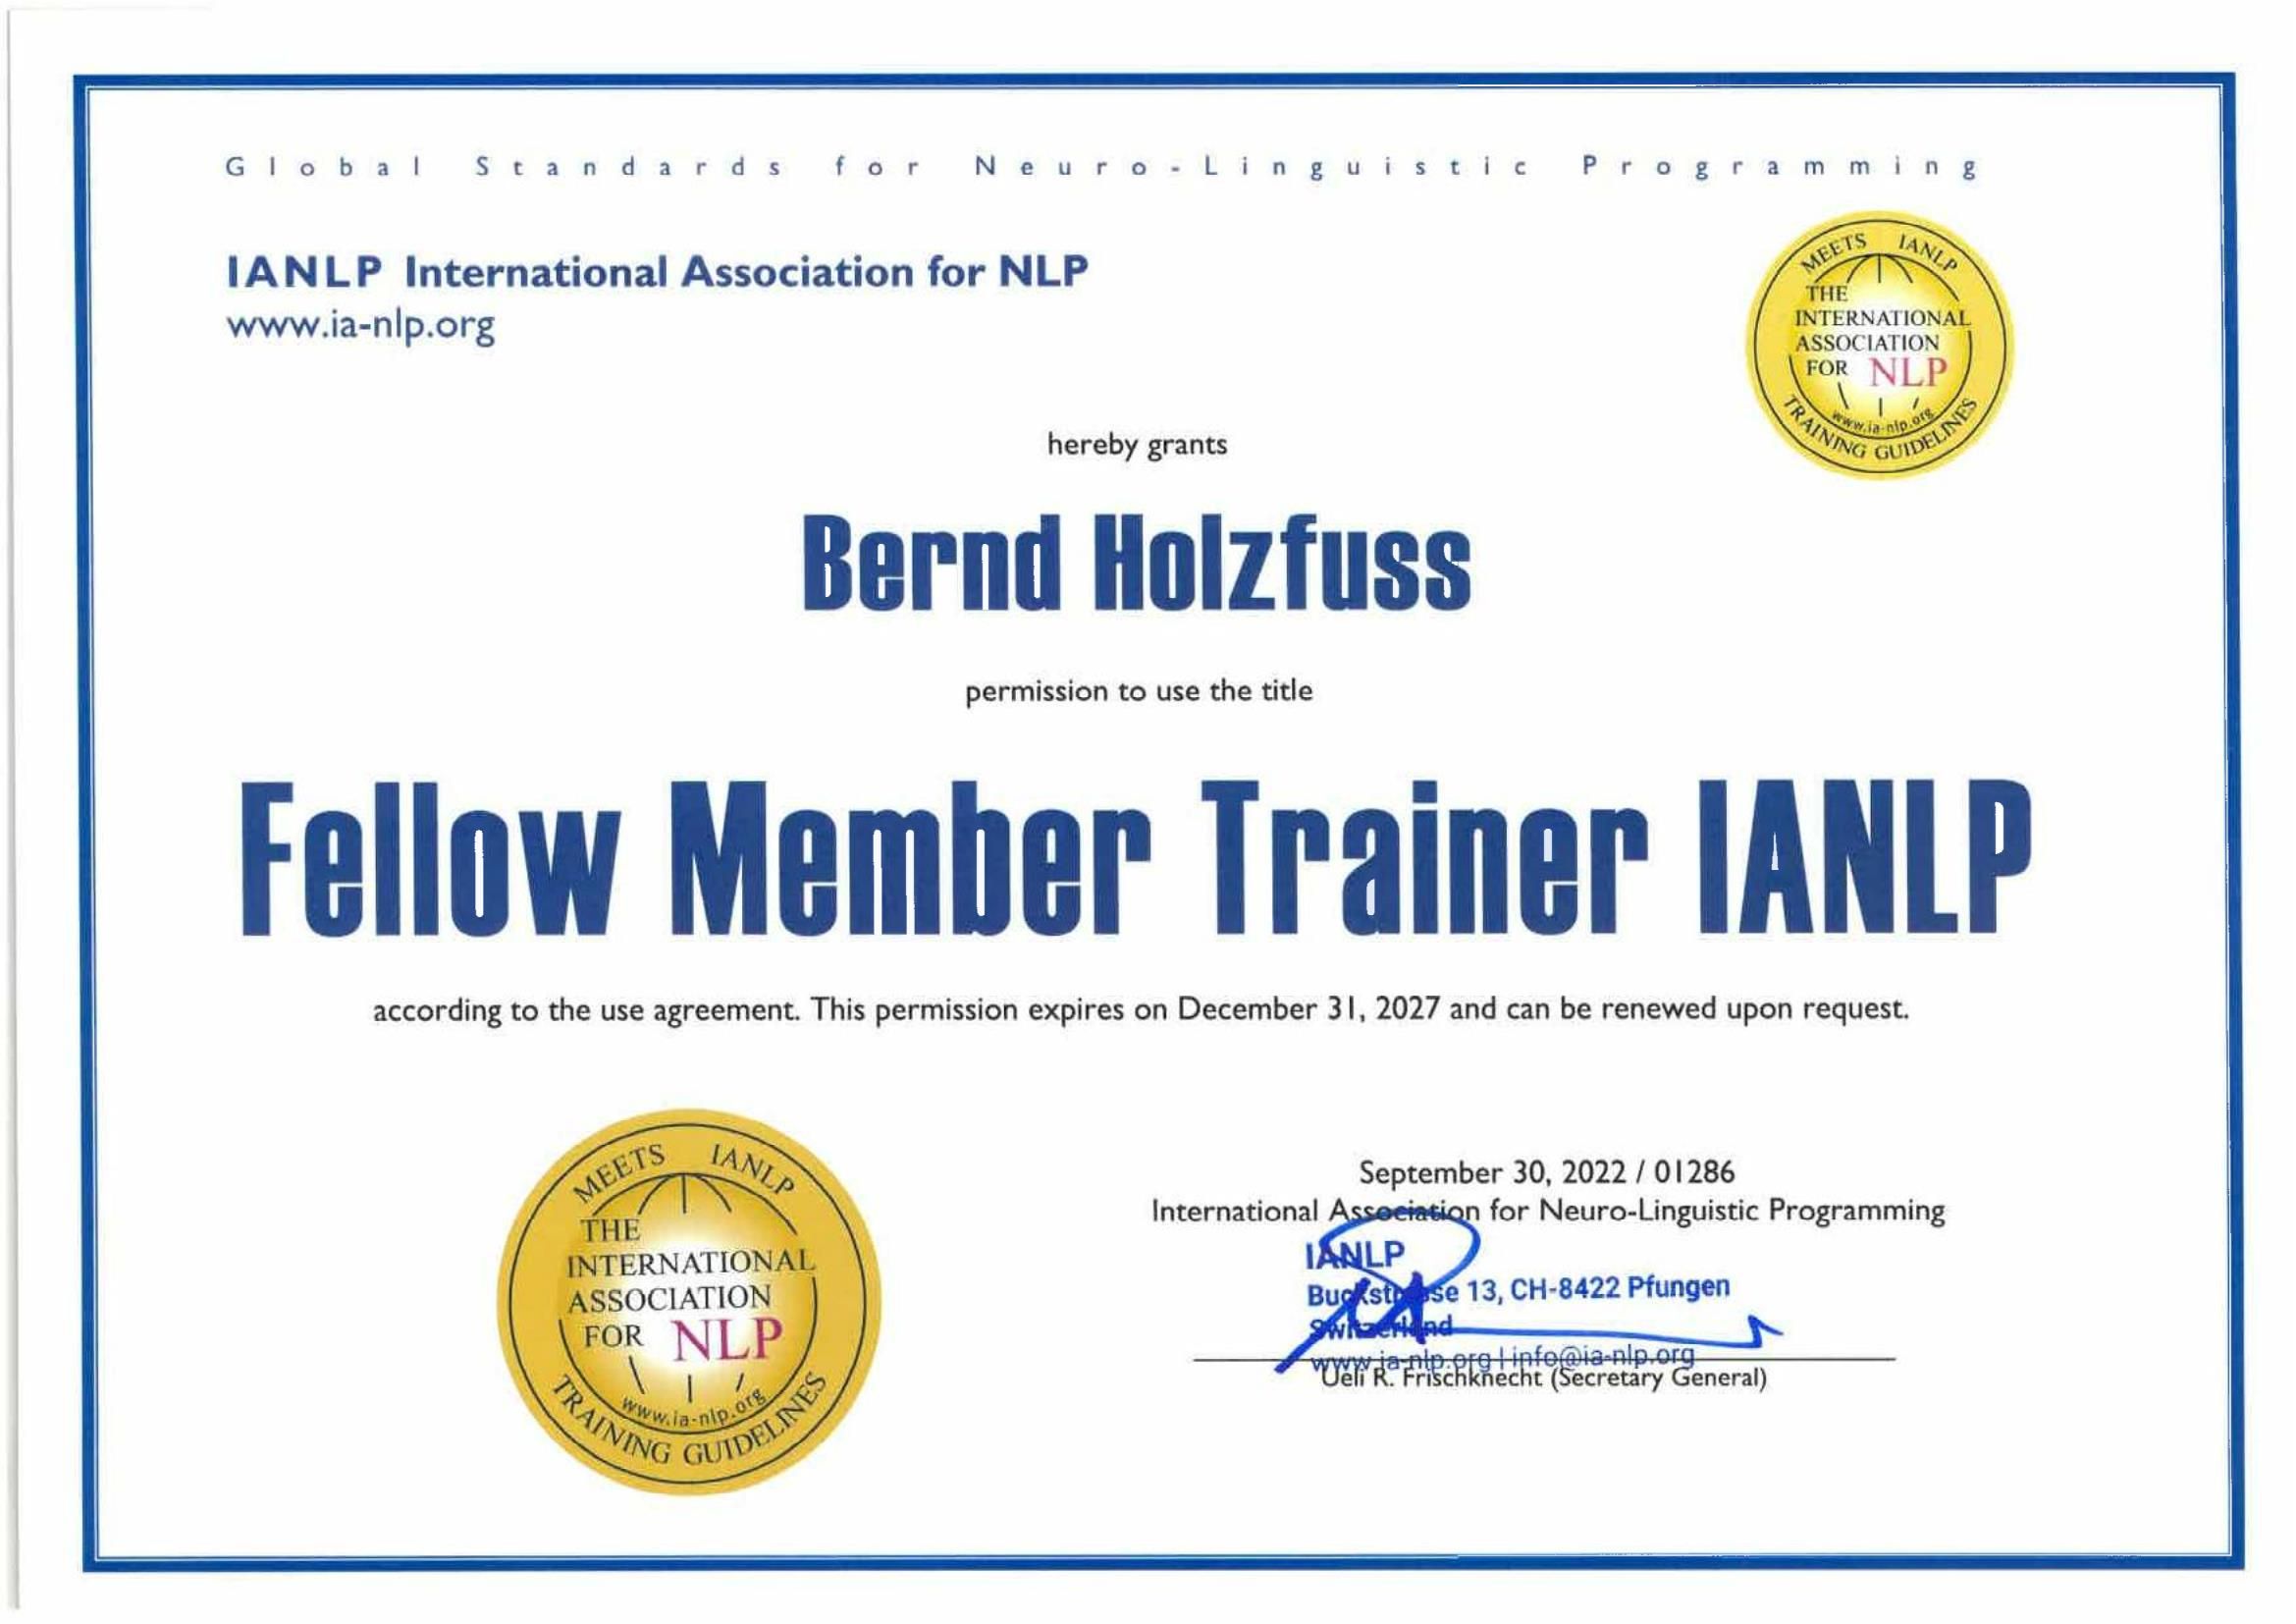 Fellow Member Trainer IANLP